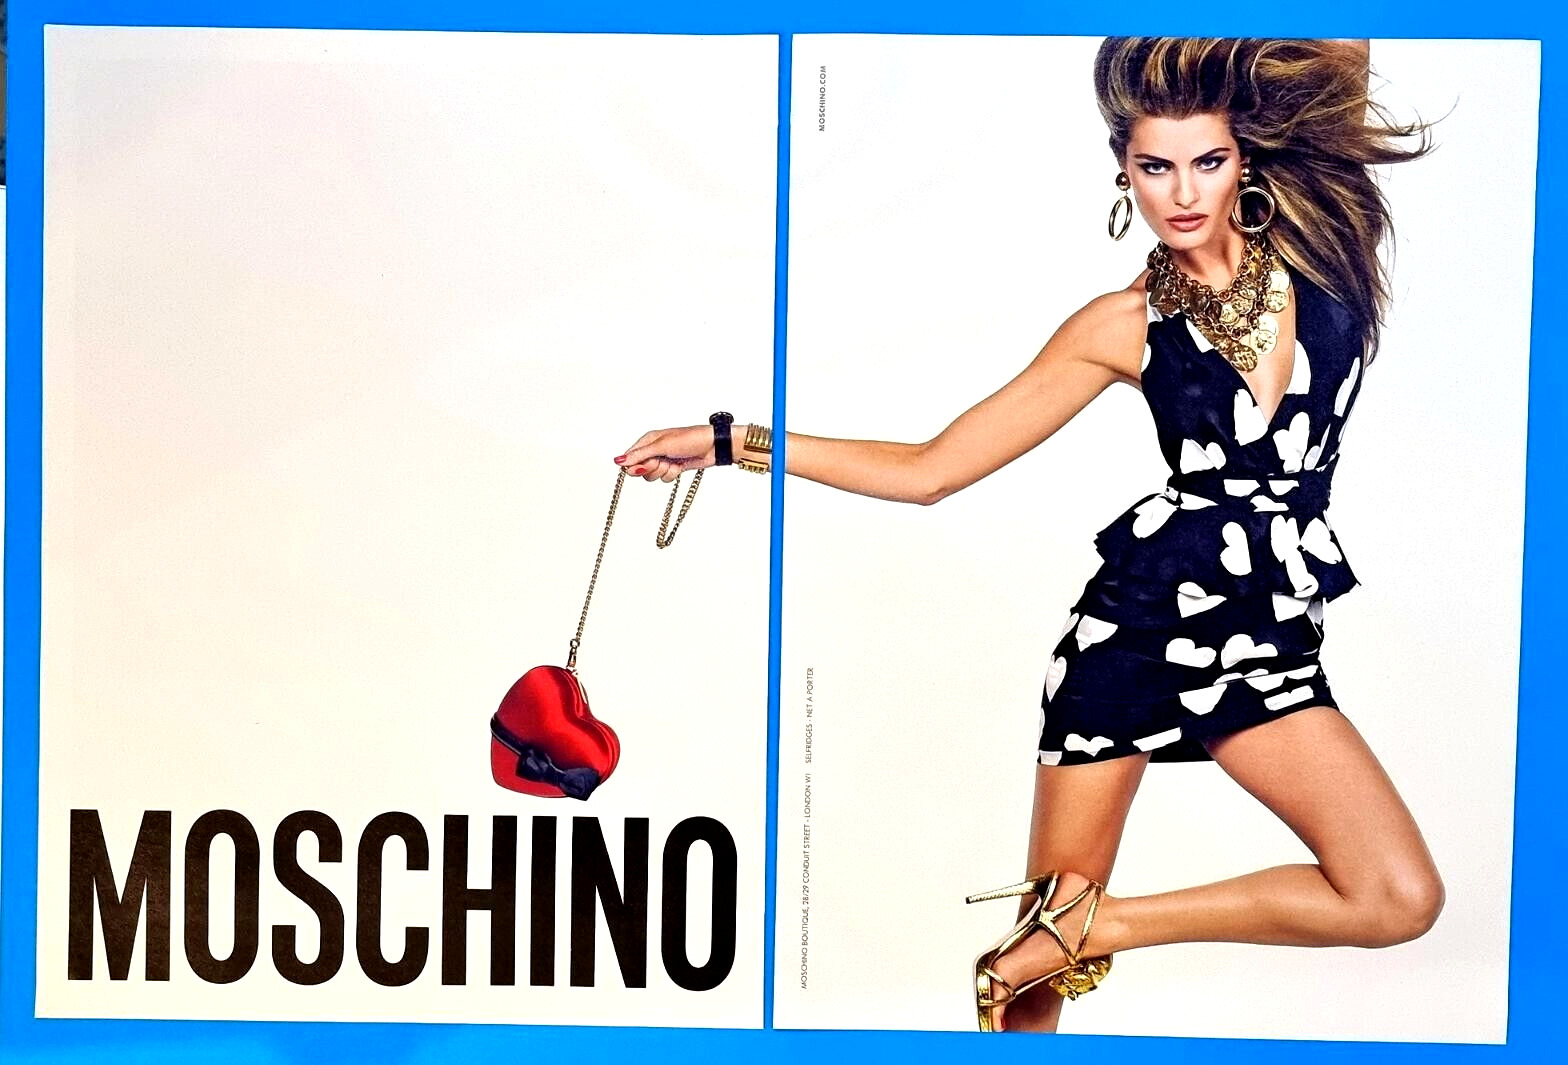 MOSCHINO  -Women\'s Fashion Dress High Heel Shoes Bag  Magazine  Print  Ad - D589